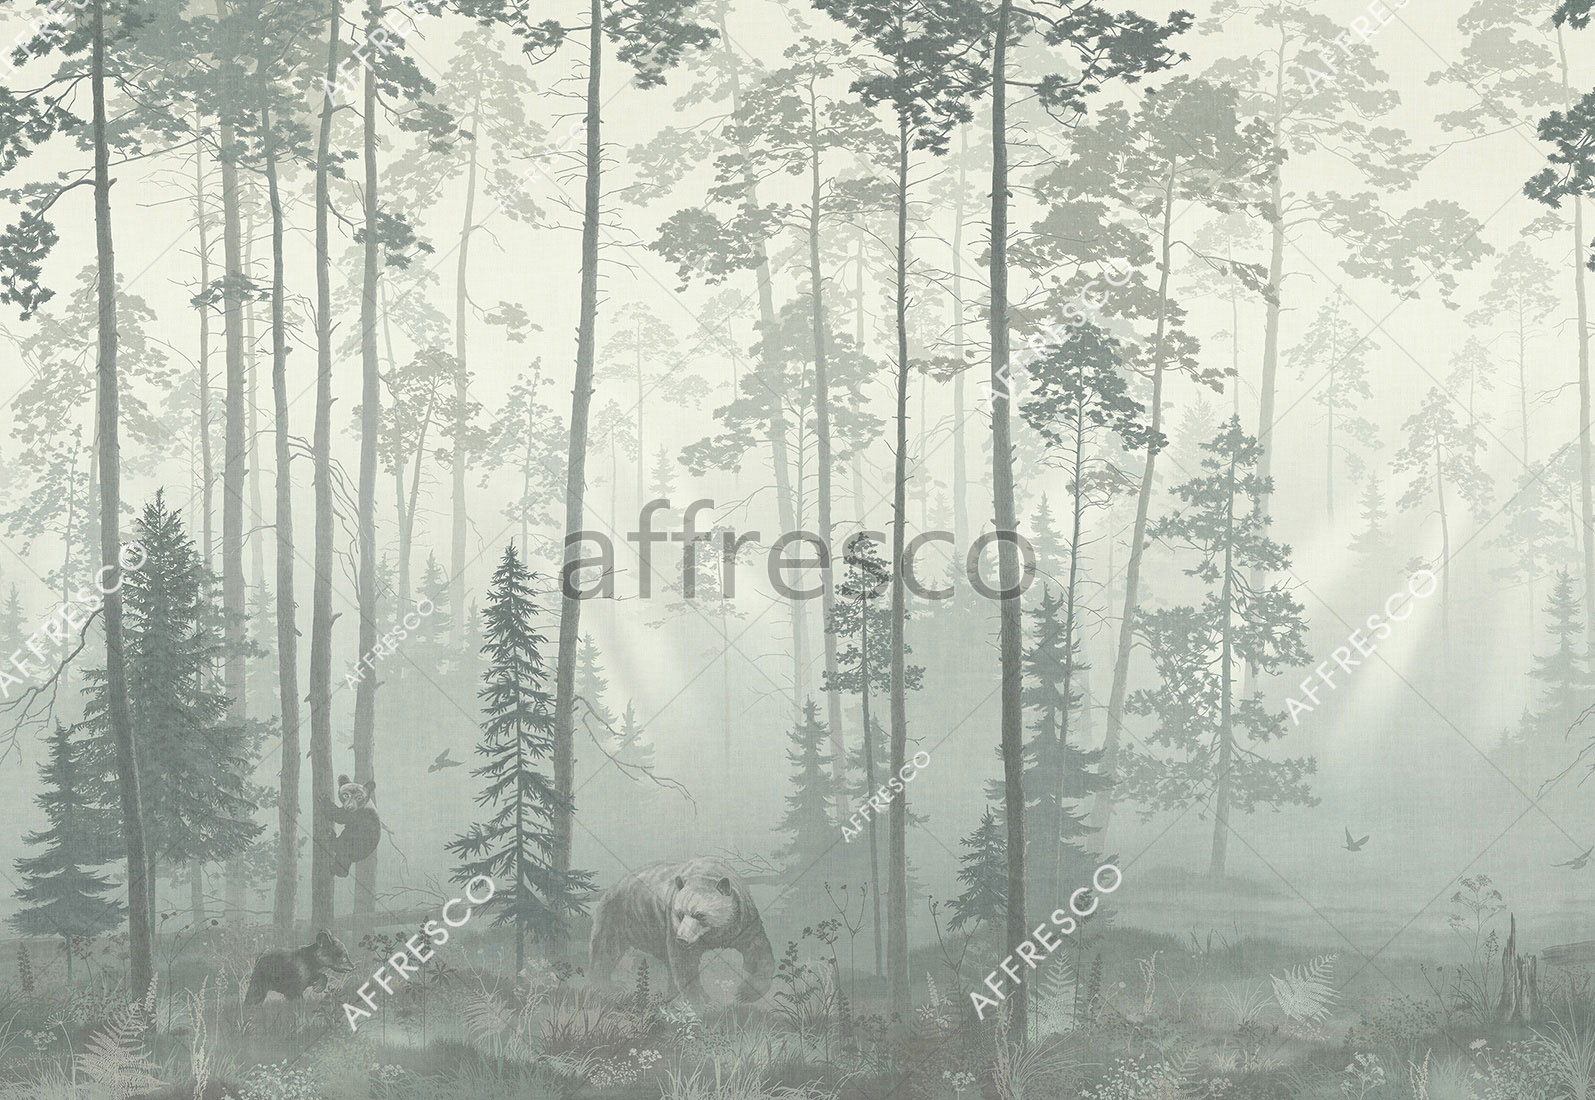 ID135997 | Forest |  | Affresco Factory